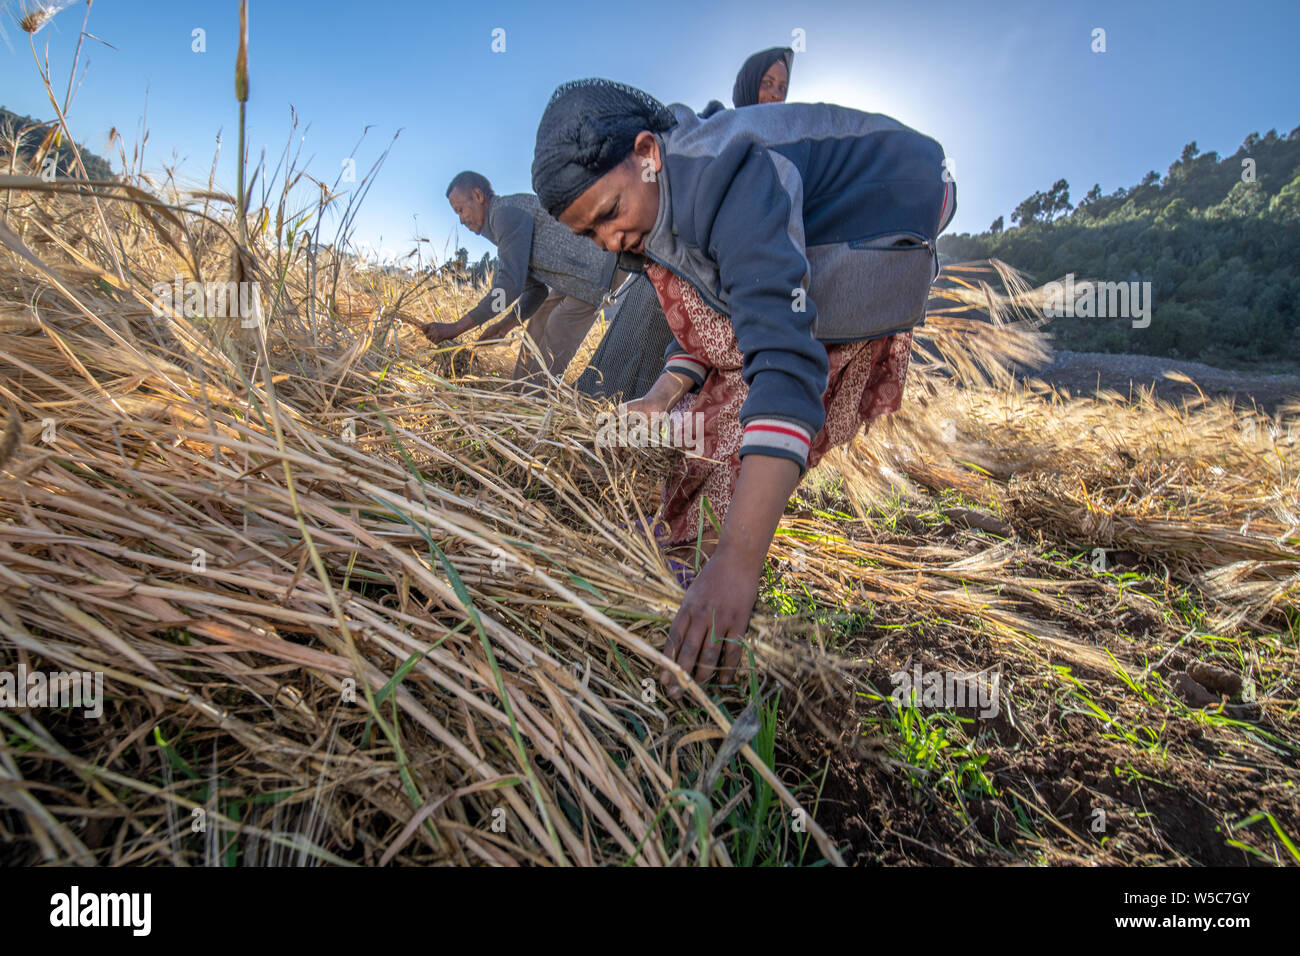 A woman harvesting barley near Ankober, Ethiopia. Stock Photo